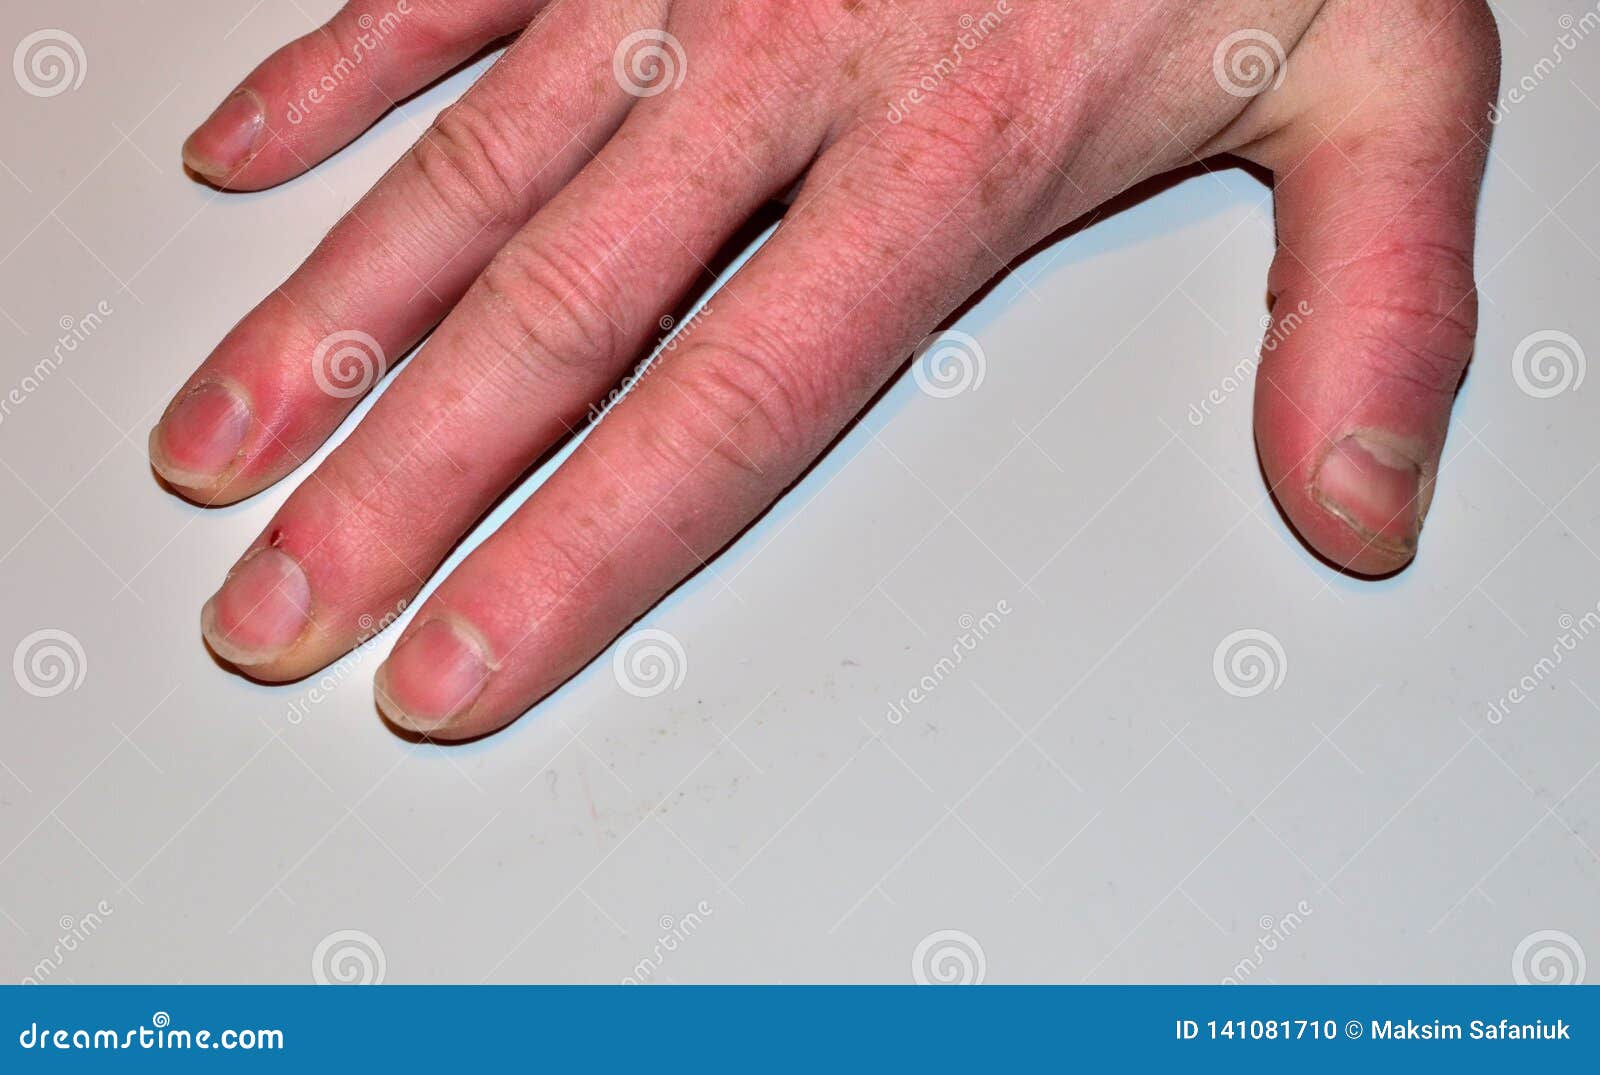 male nails disease fingernail lack nutrients do not make nail not shape not care health care concept male nails disease 141081710